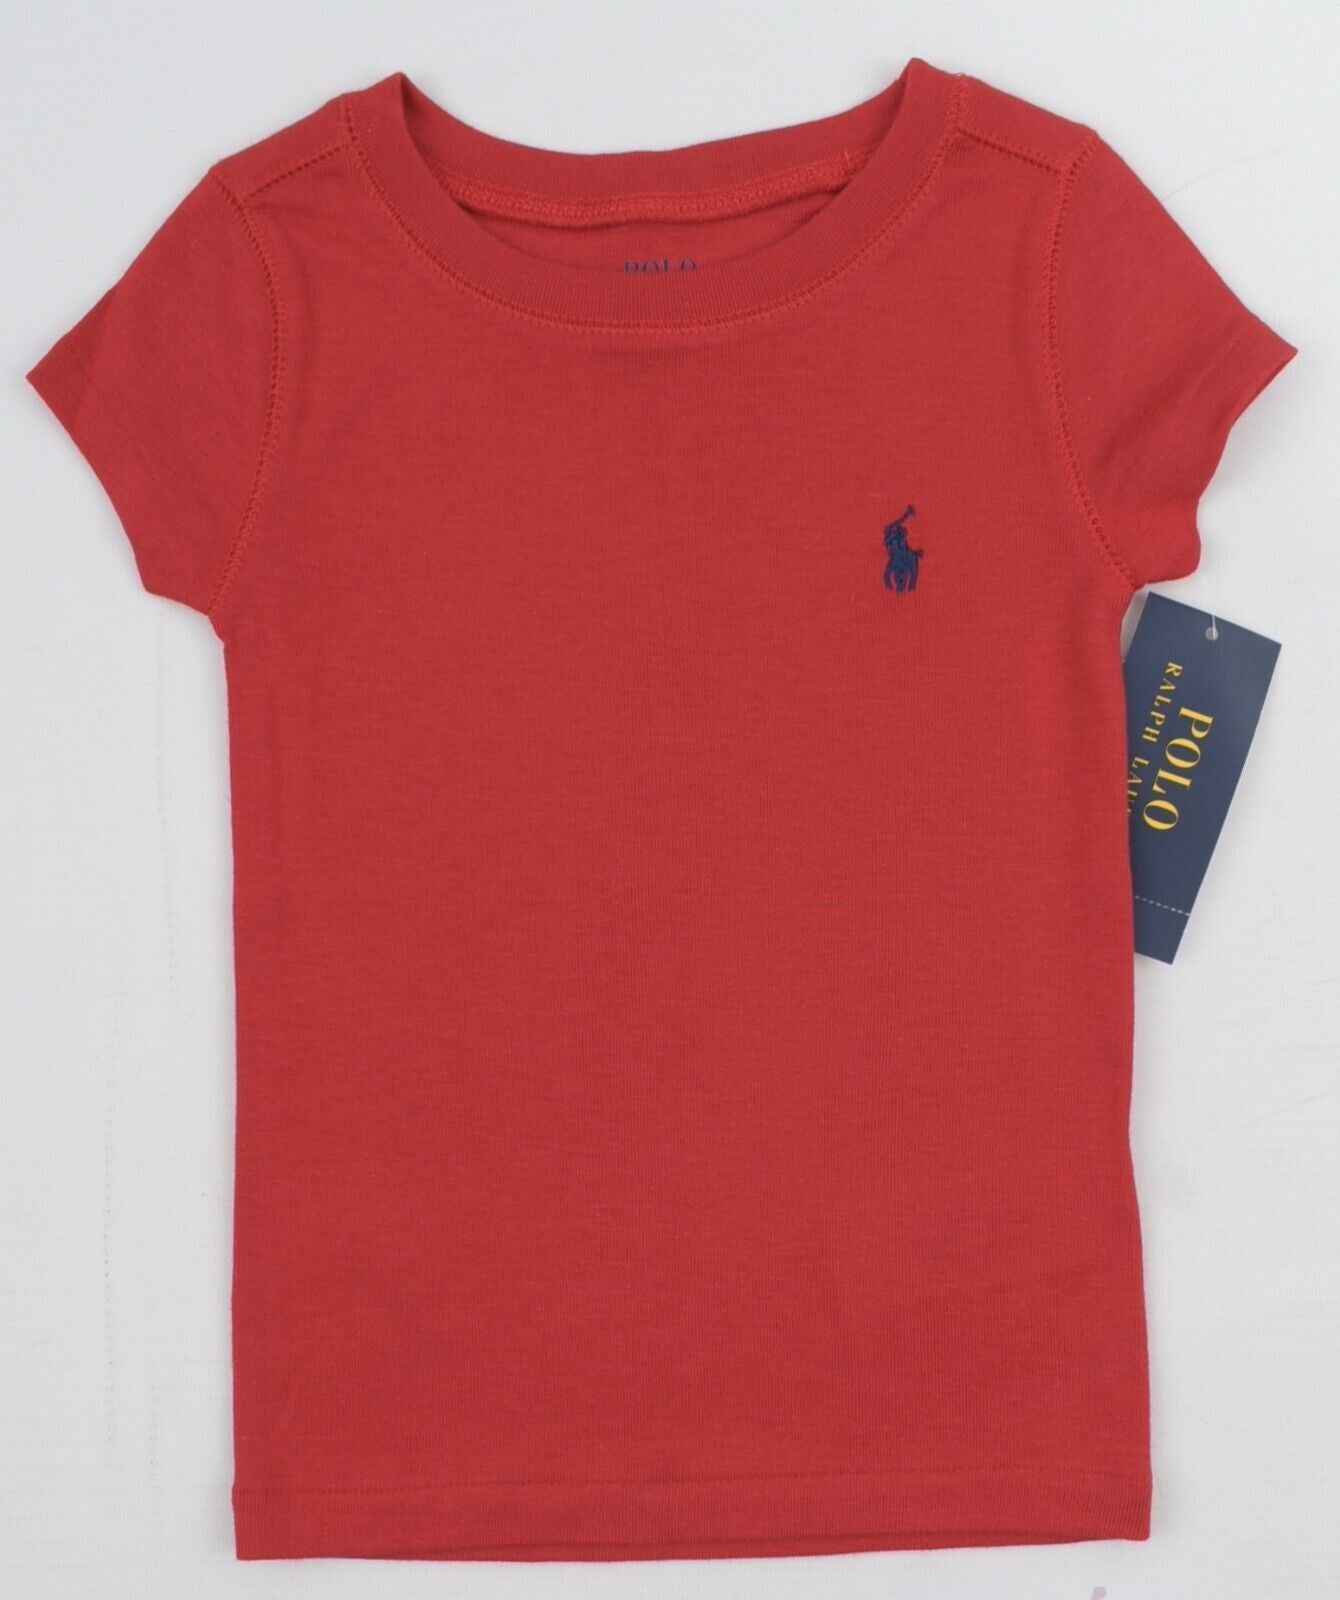 POLO RALPH LAUREN Girls' Short Sleeve T-shirt, Cotton/Modal, Red, size 3 years